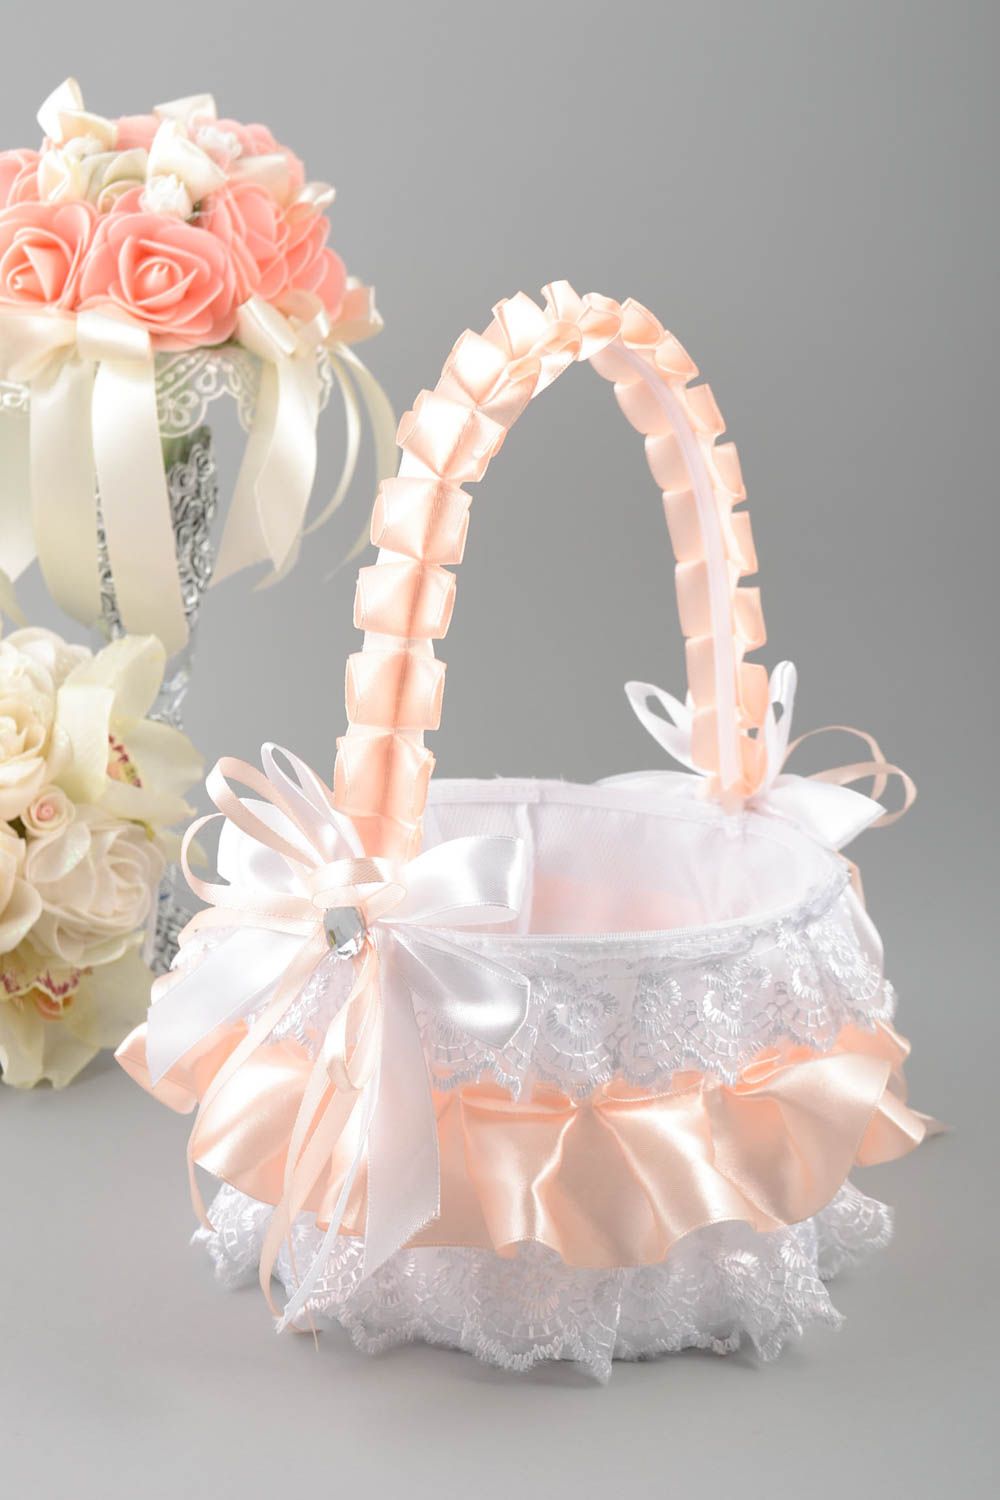 Handmade designer decorative lacy wedding basket for money and flower petals photo 1